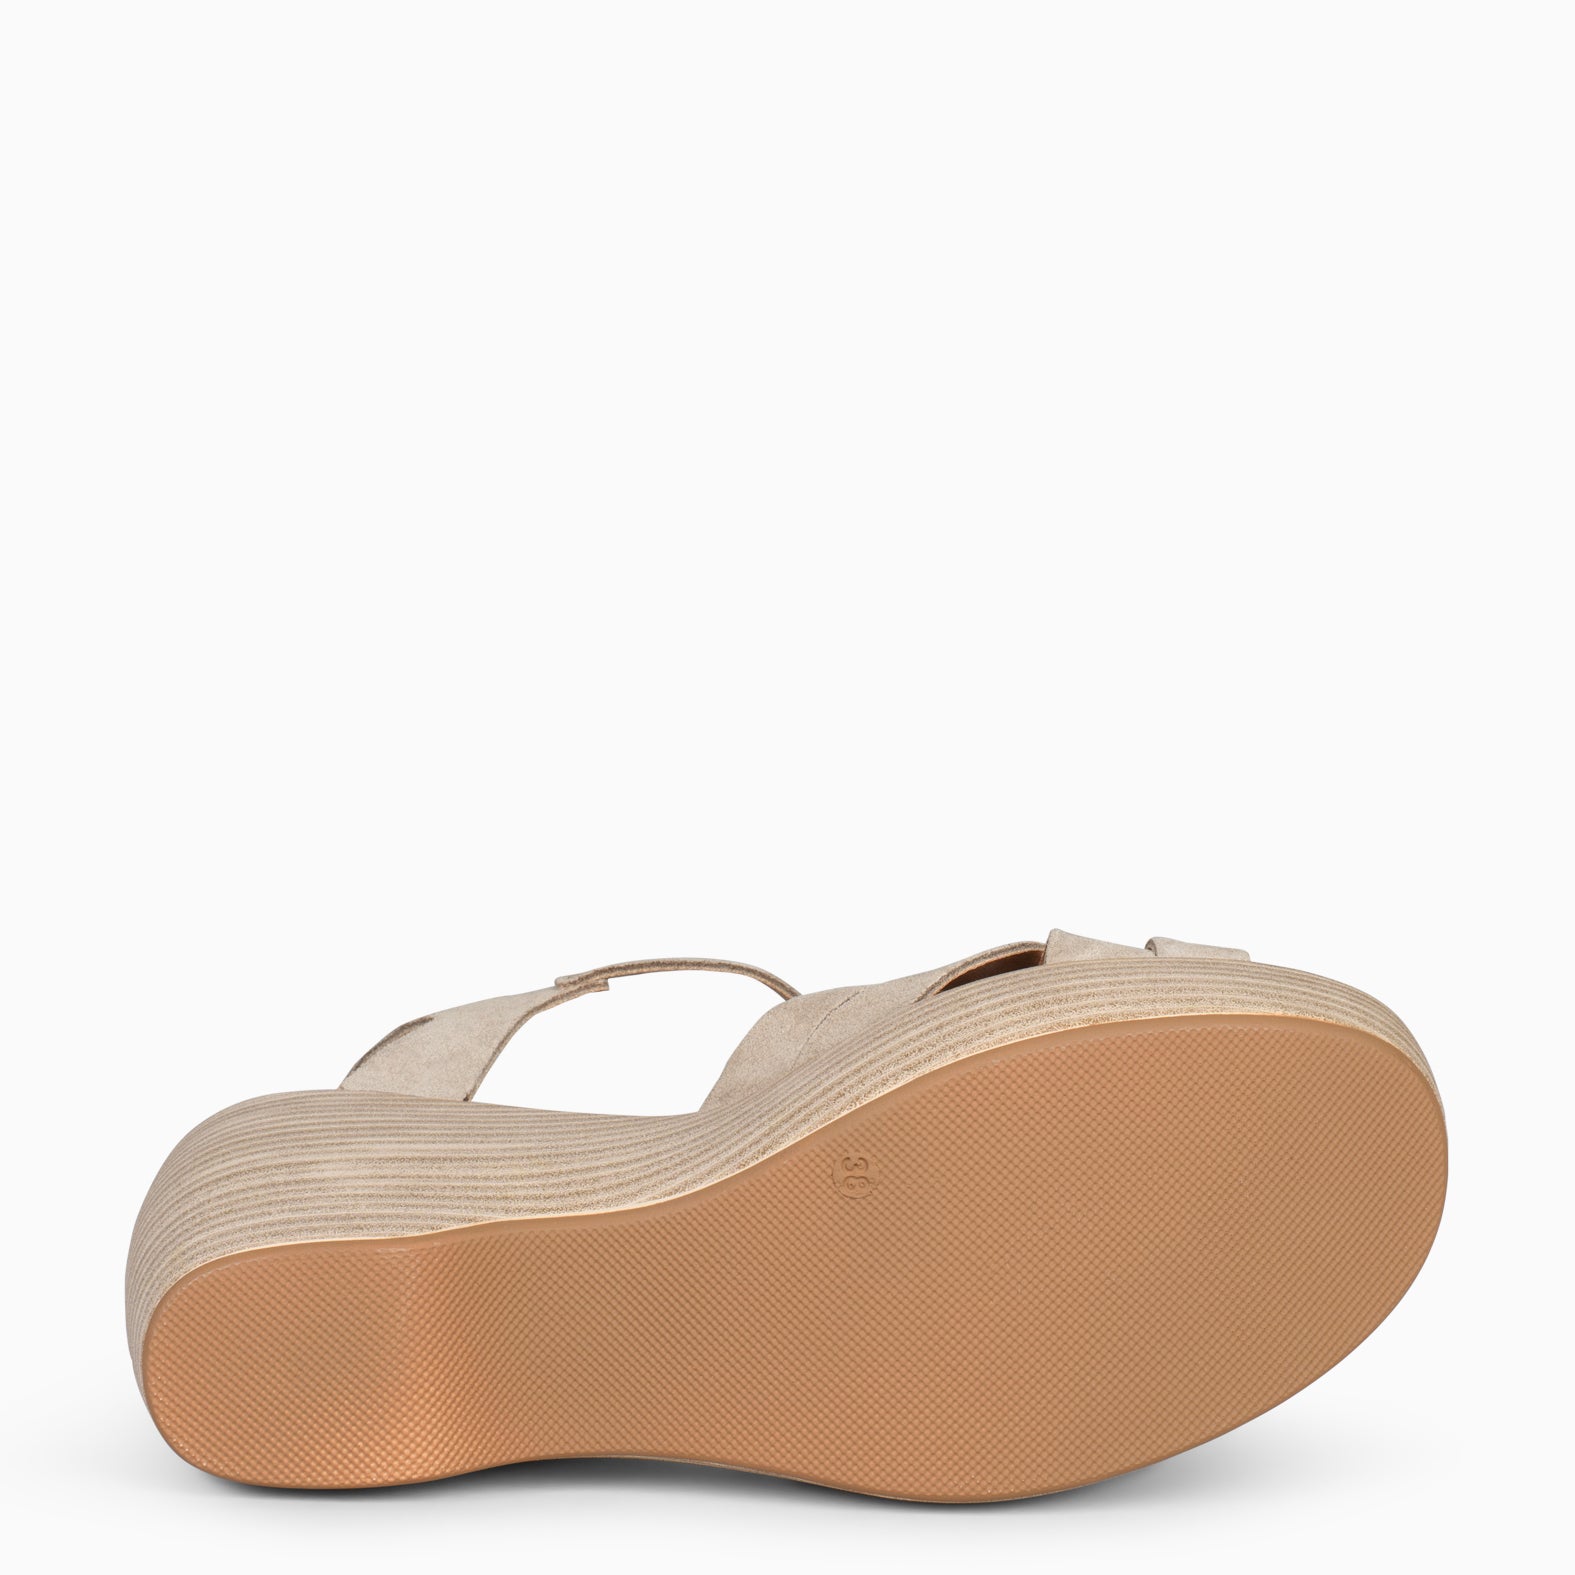 MALIBU – Sandales compensées imitation bois TAUPE